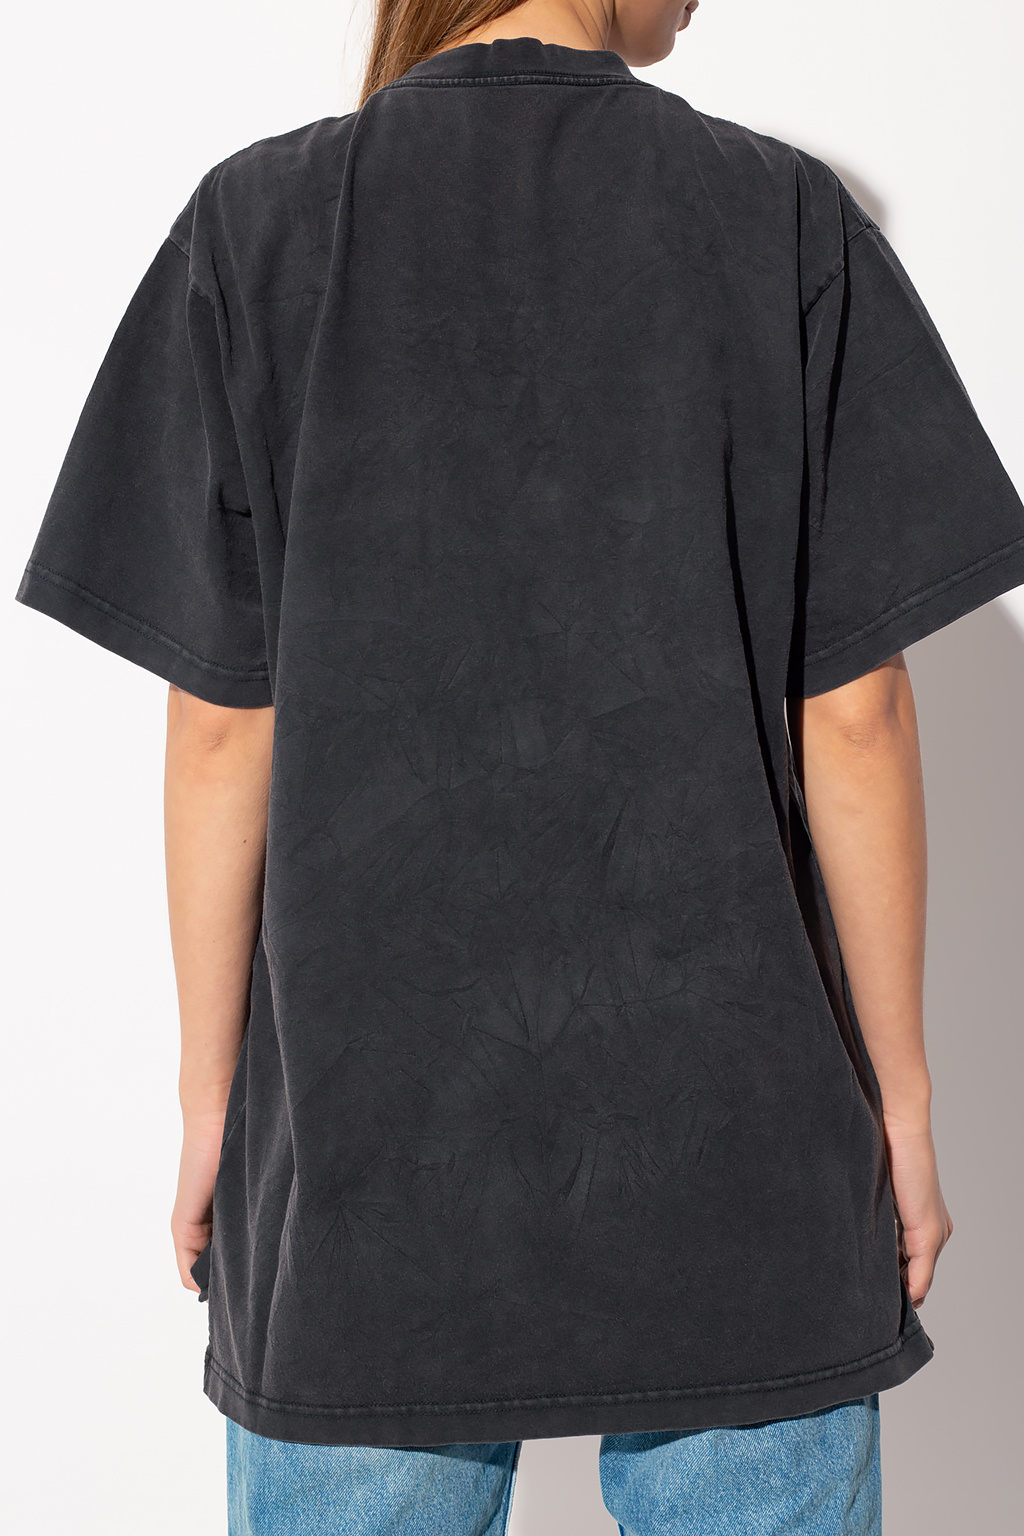 Balenciaga Philipp Plein skull-print T-shirt dress